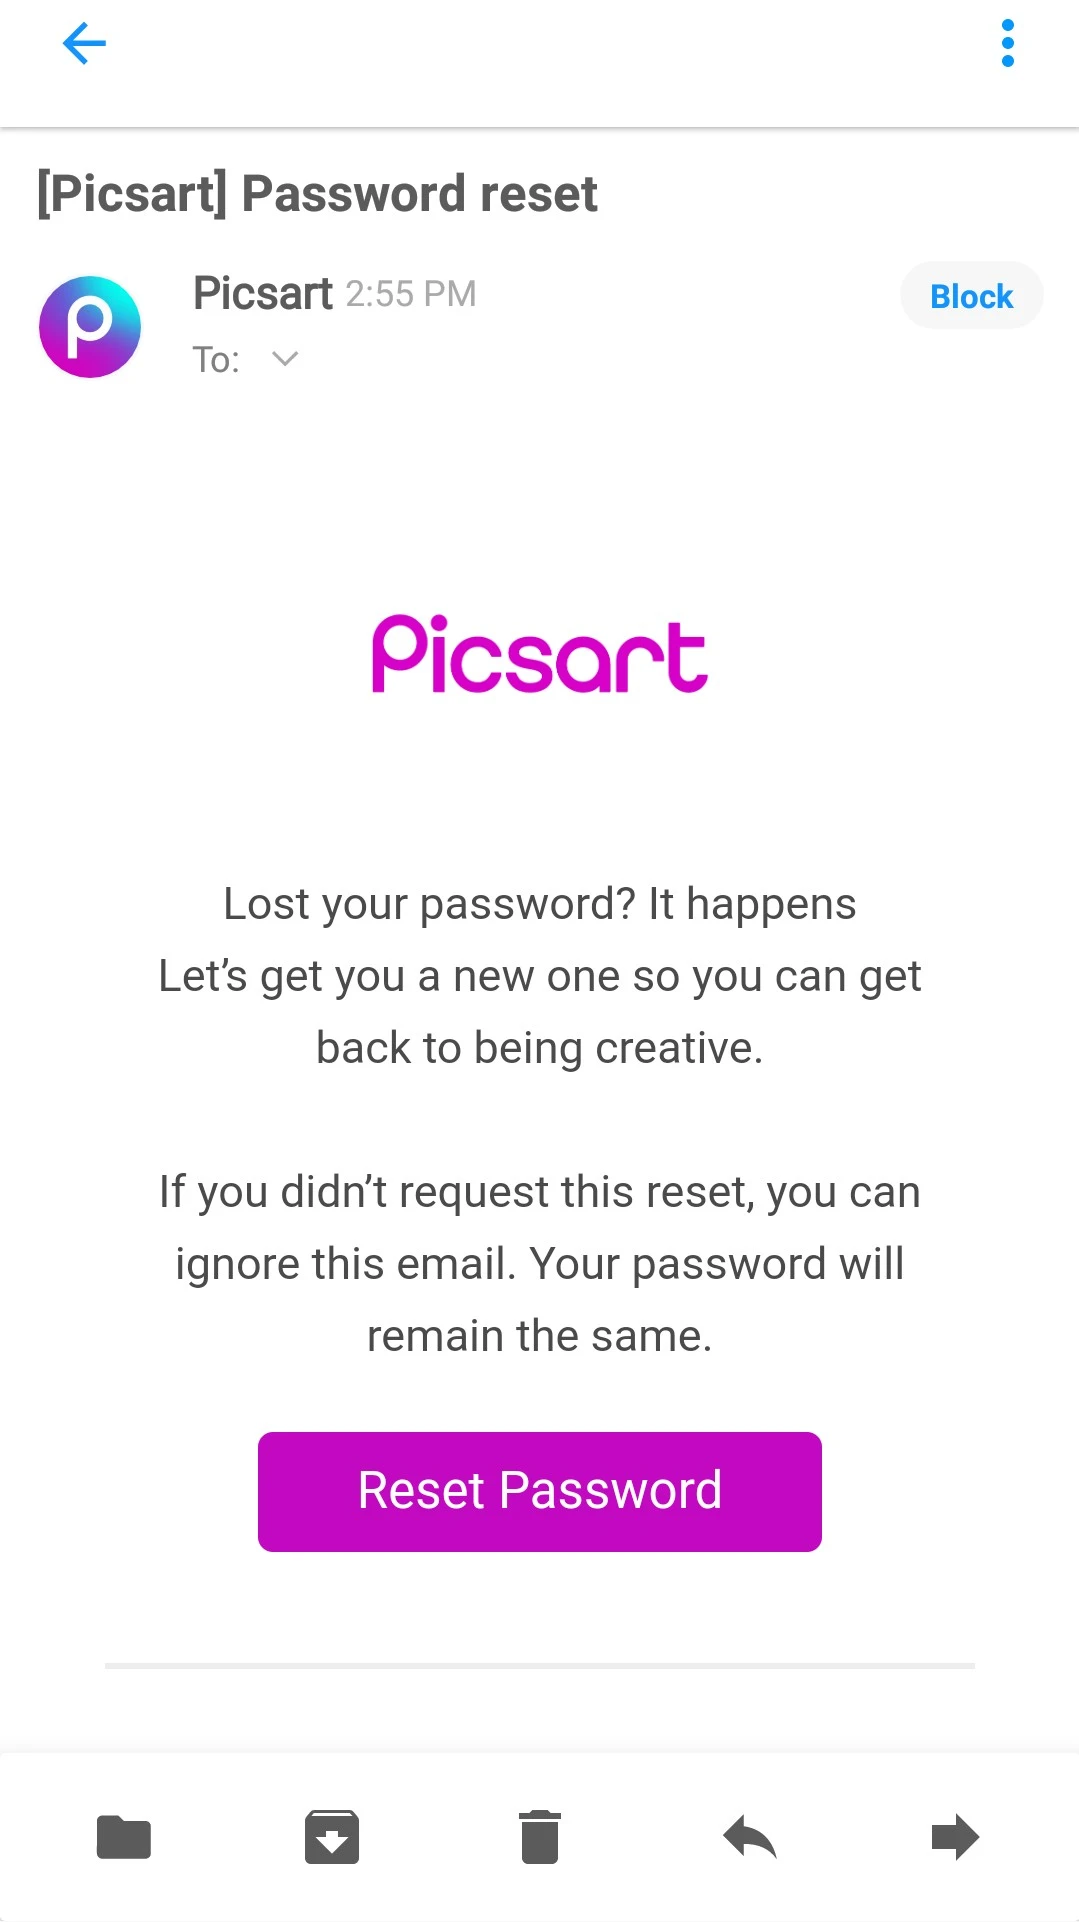 Picsart password reset email 